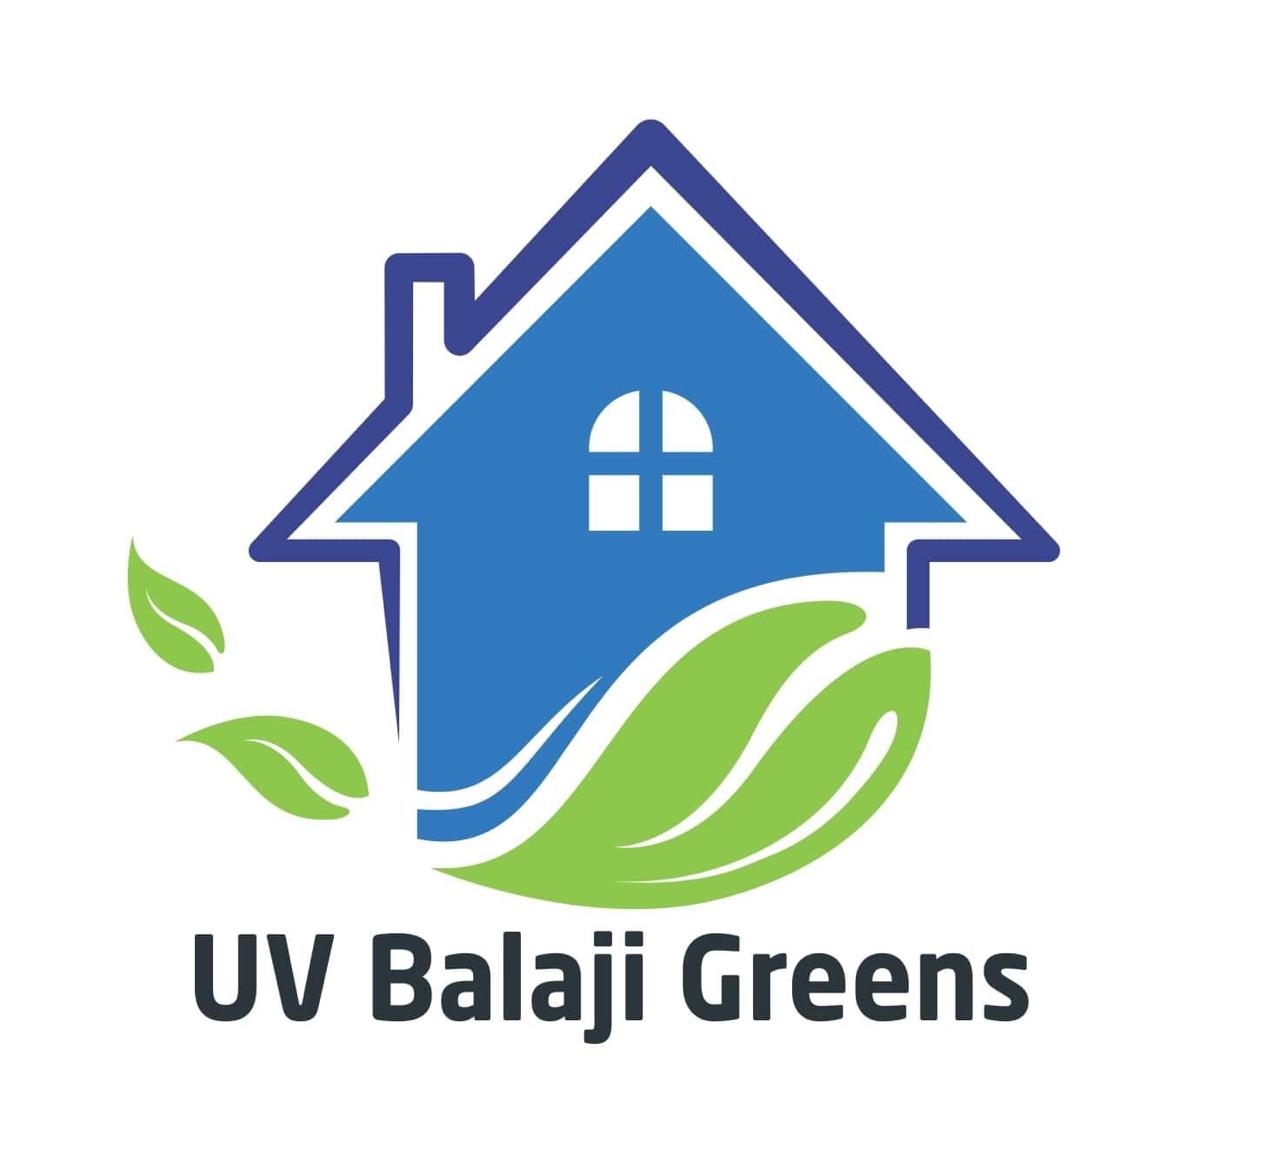 UV Balaji Greens